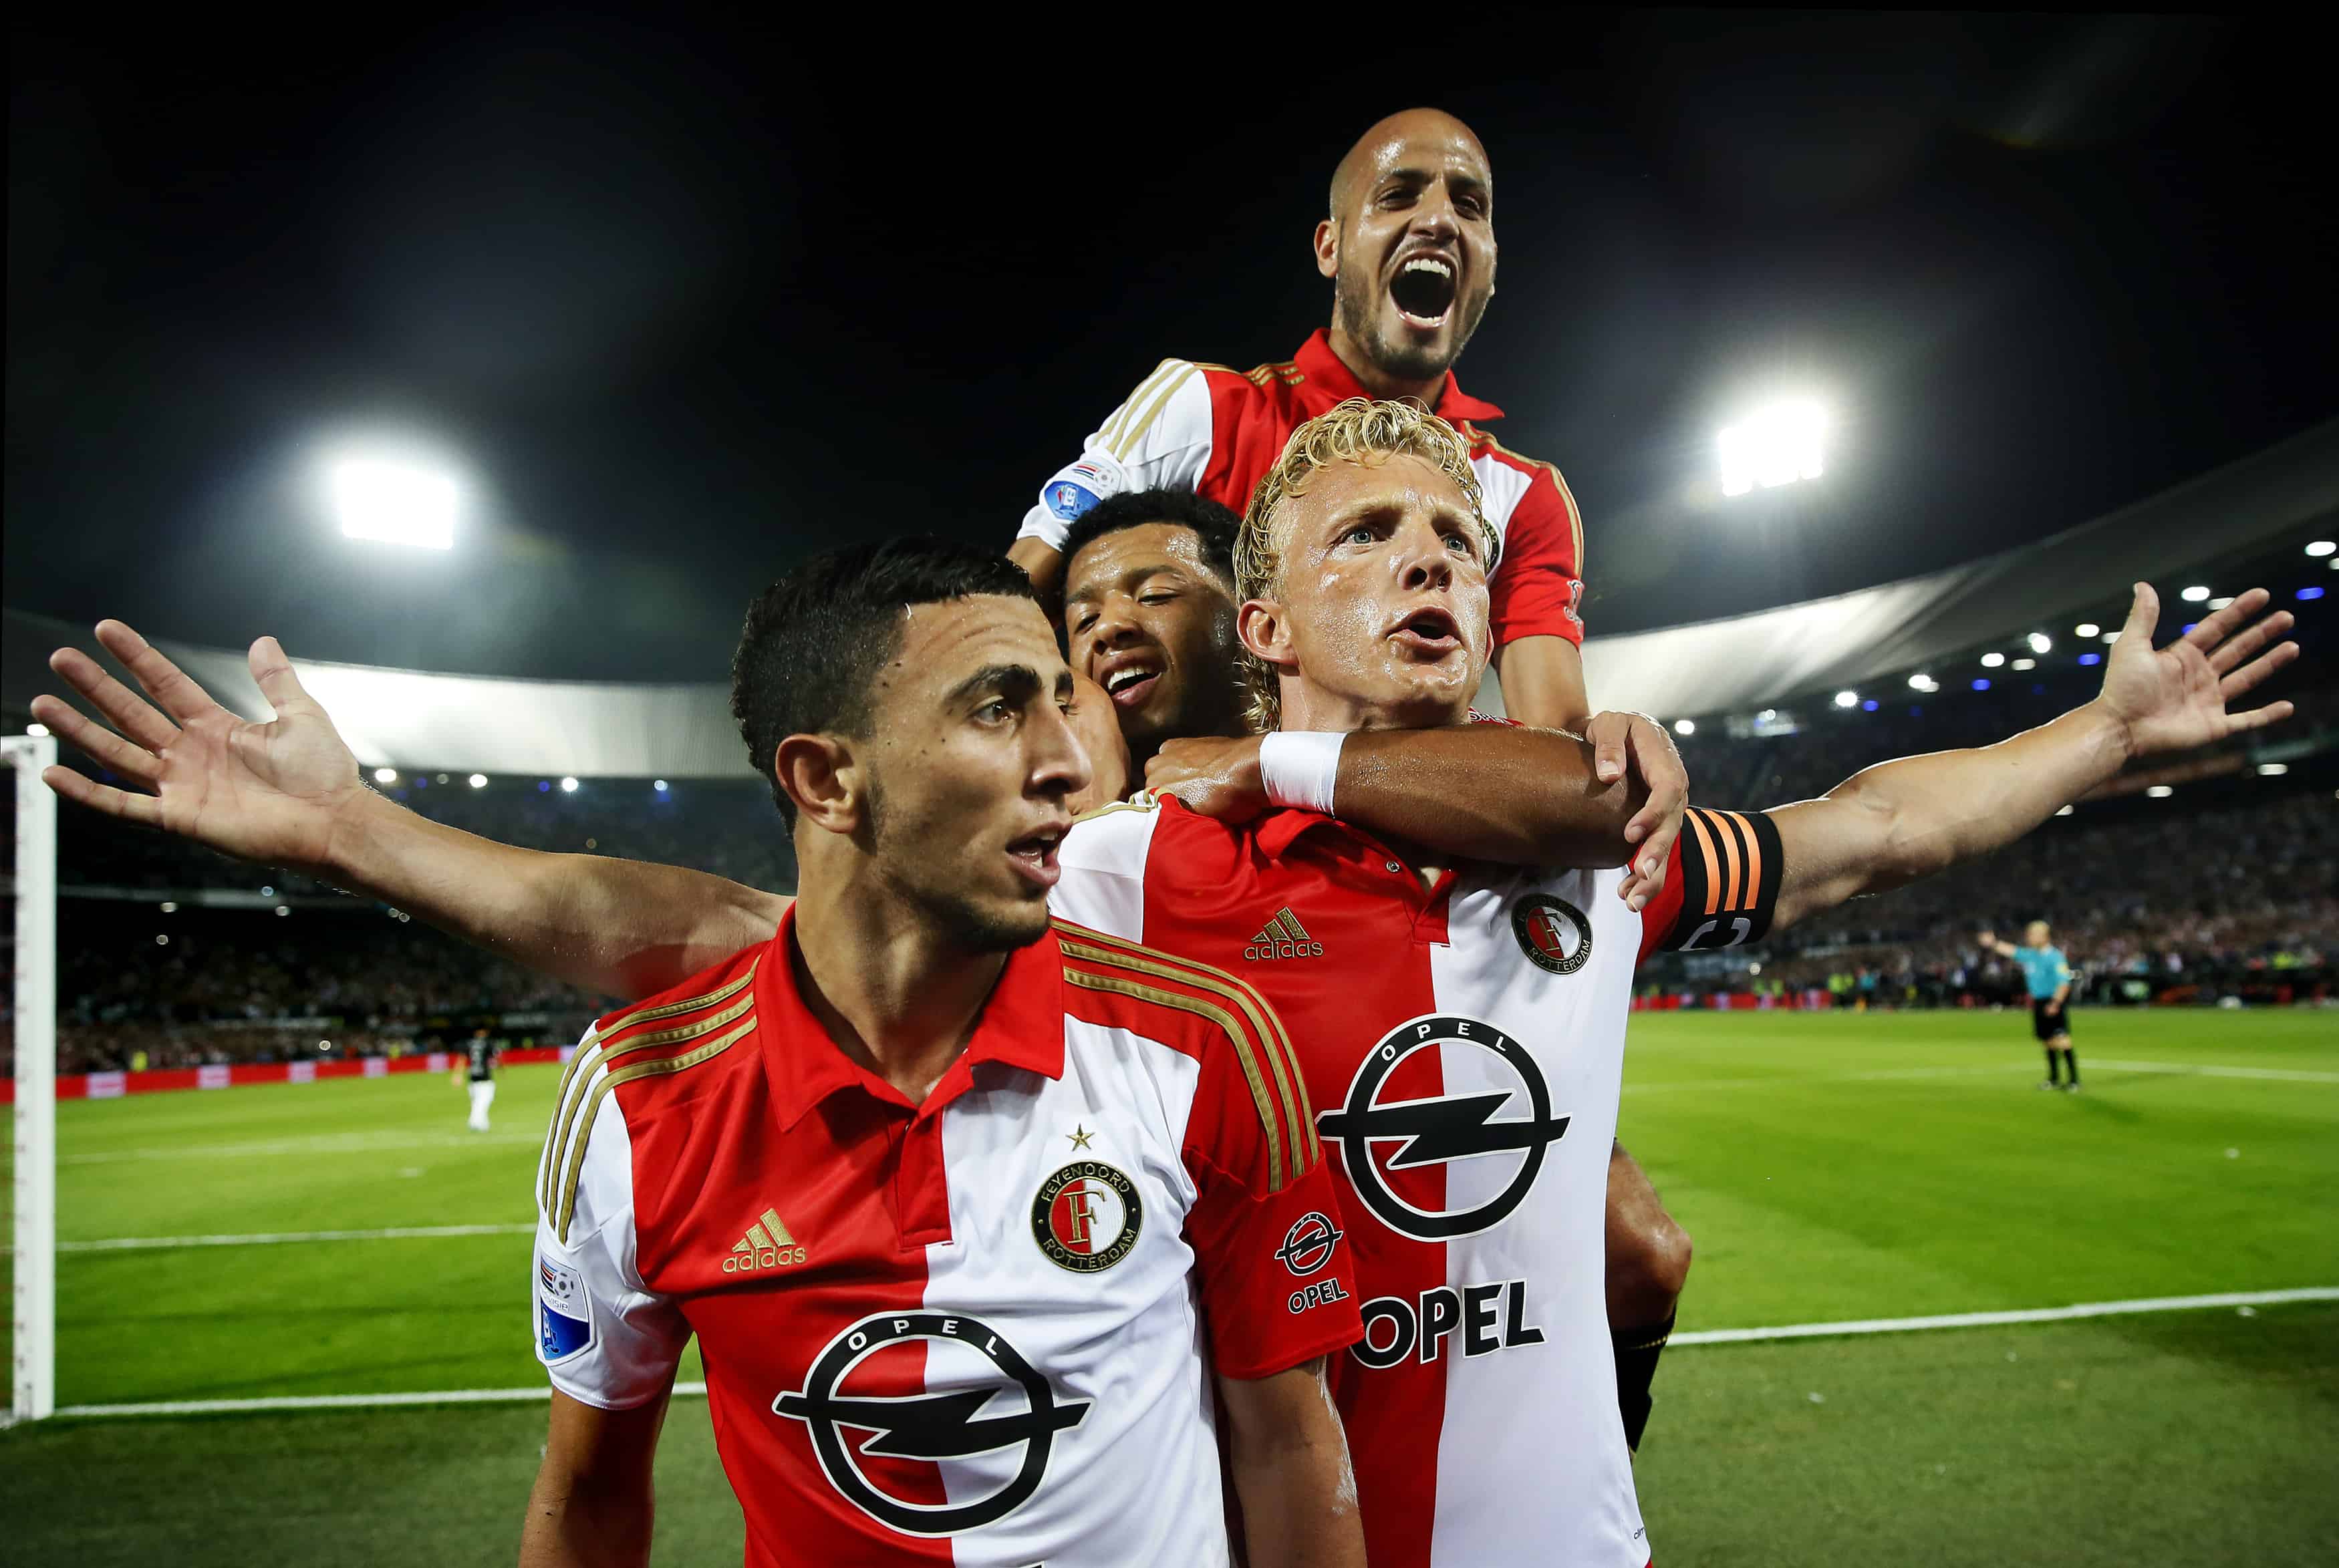 (L-R) Bilal Basacikoglu, Tonny Vilhena, Dirk Kuyt, Karim el Ahmadi of Feyenoord